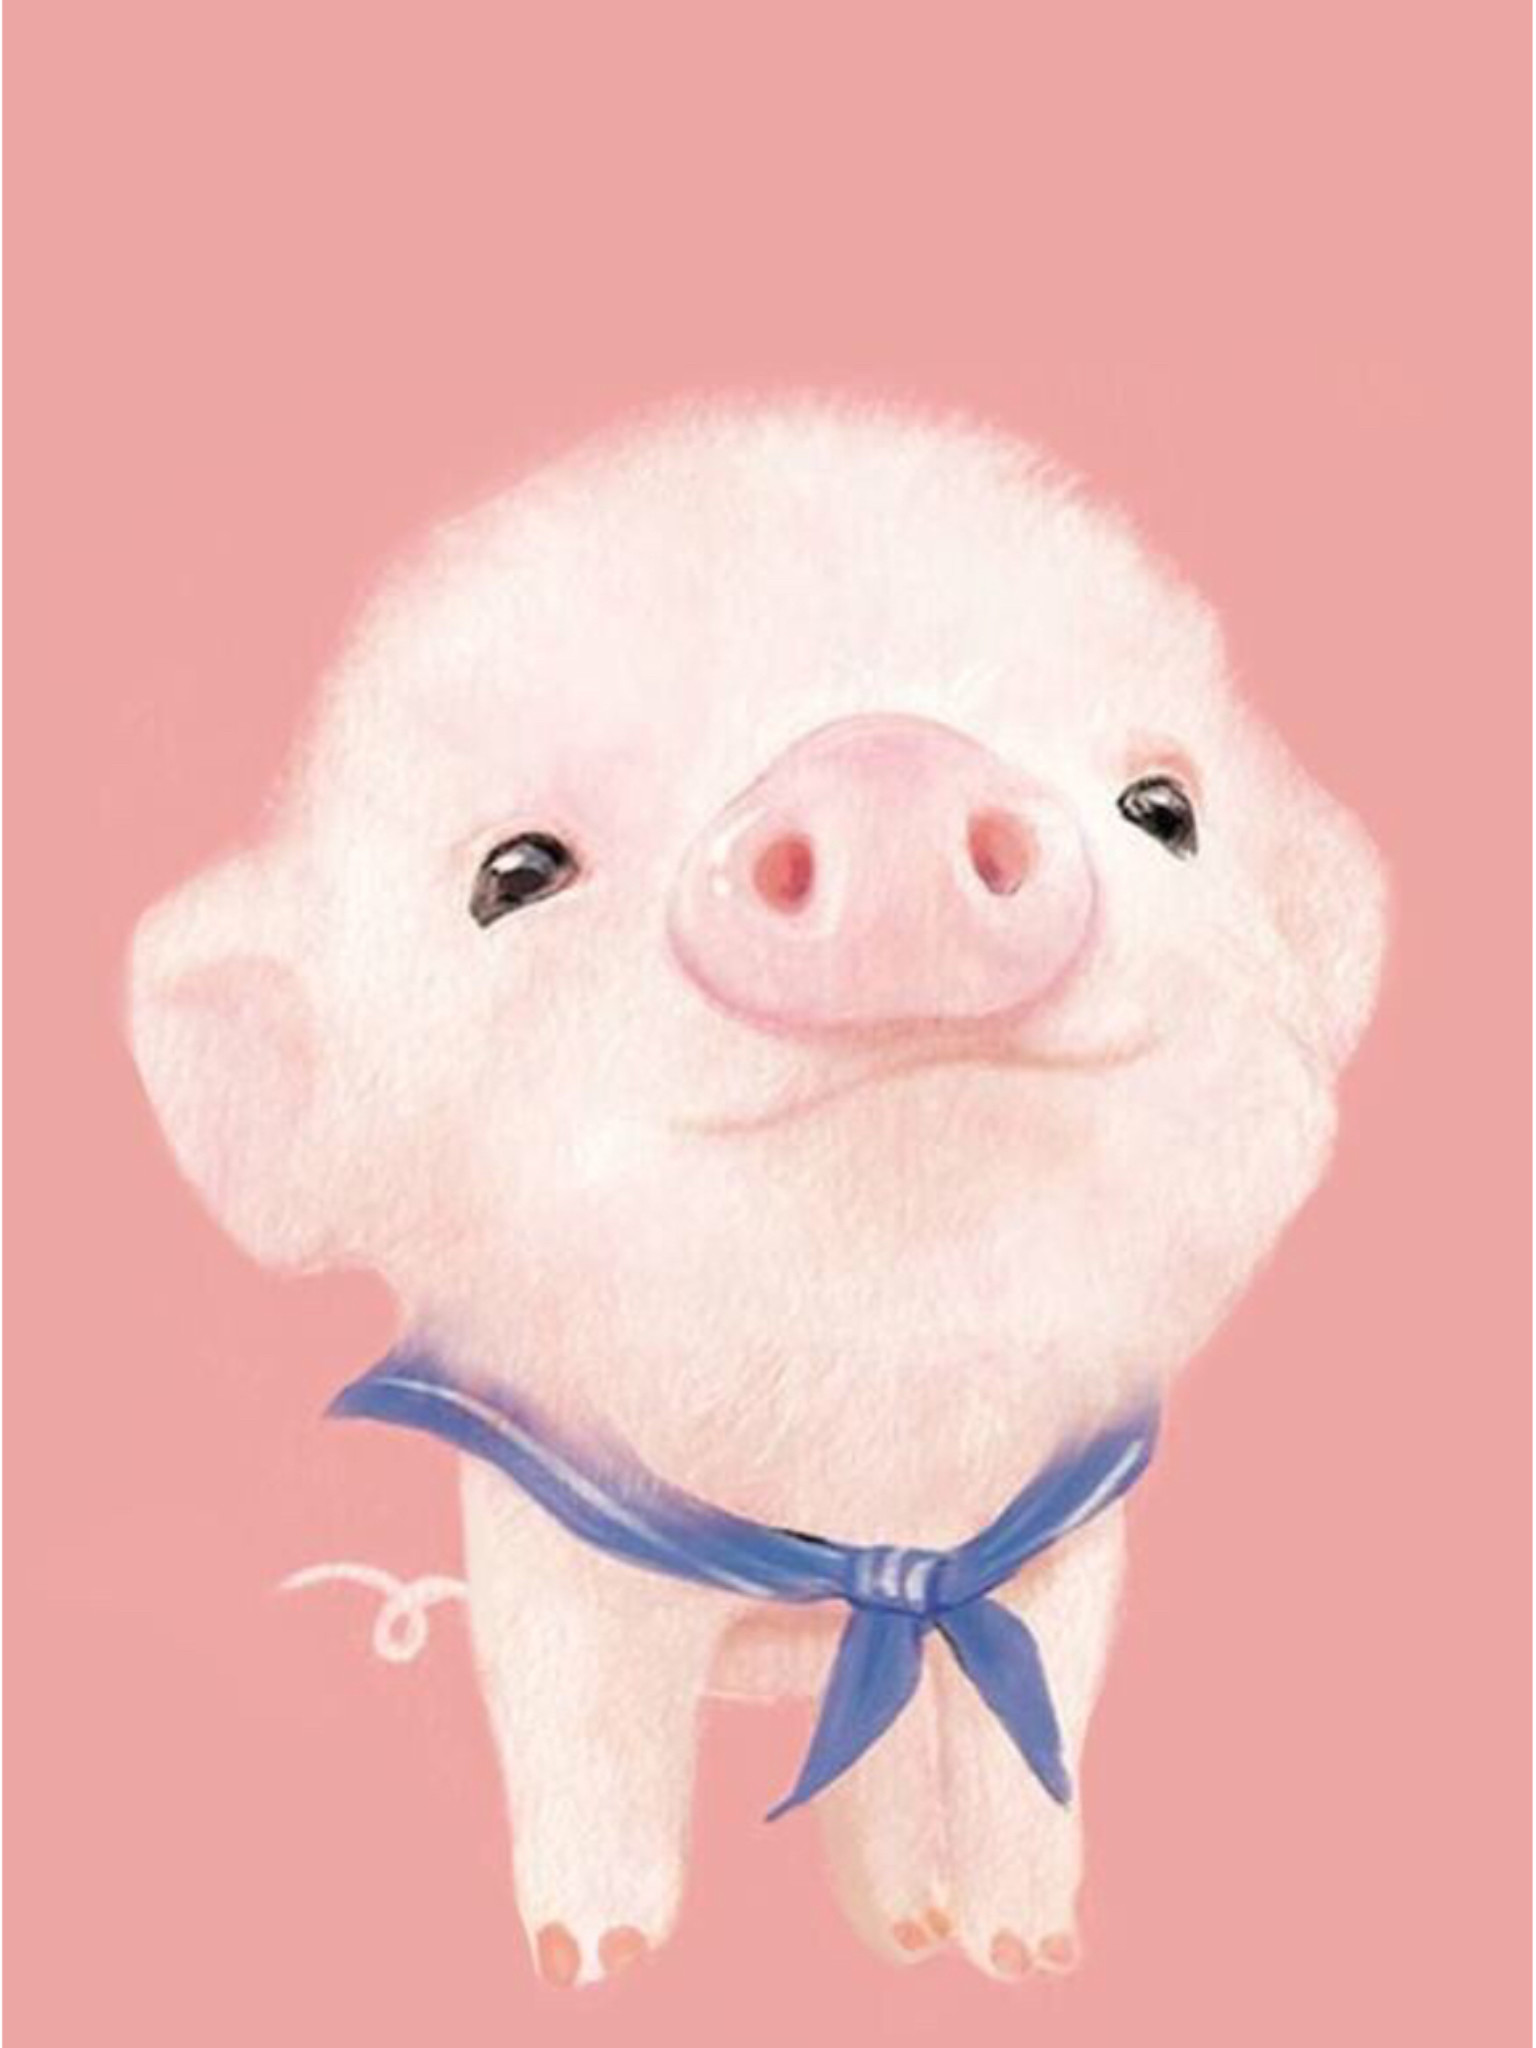 1536x2048 Cute pig wallpaper